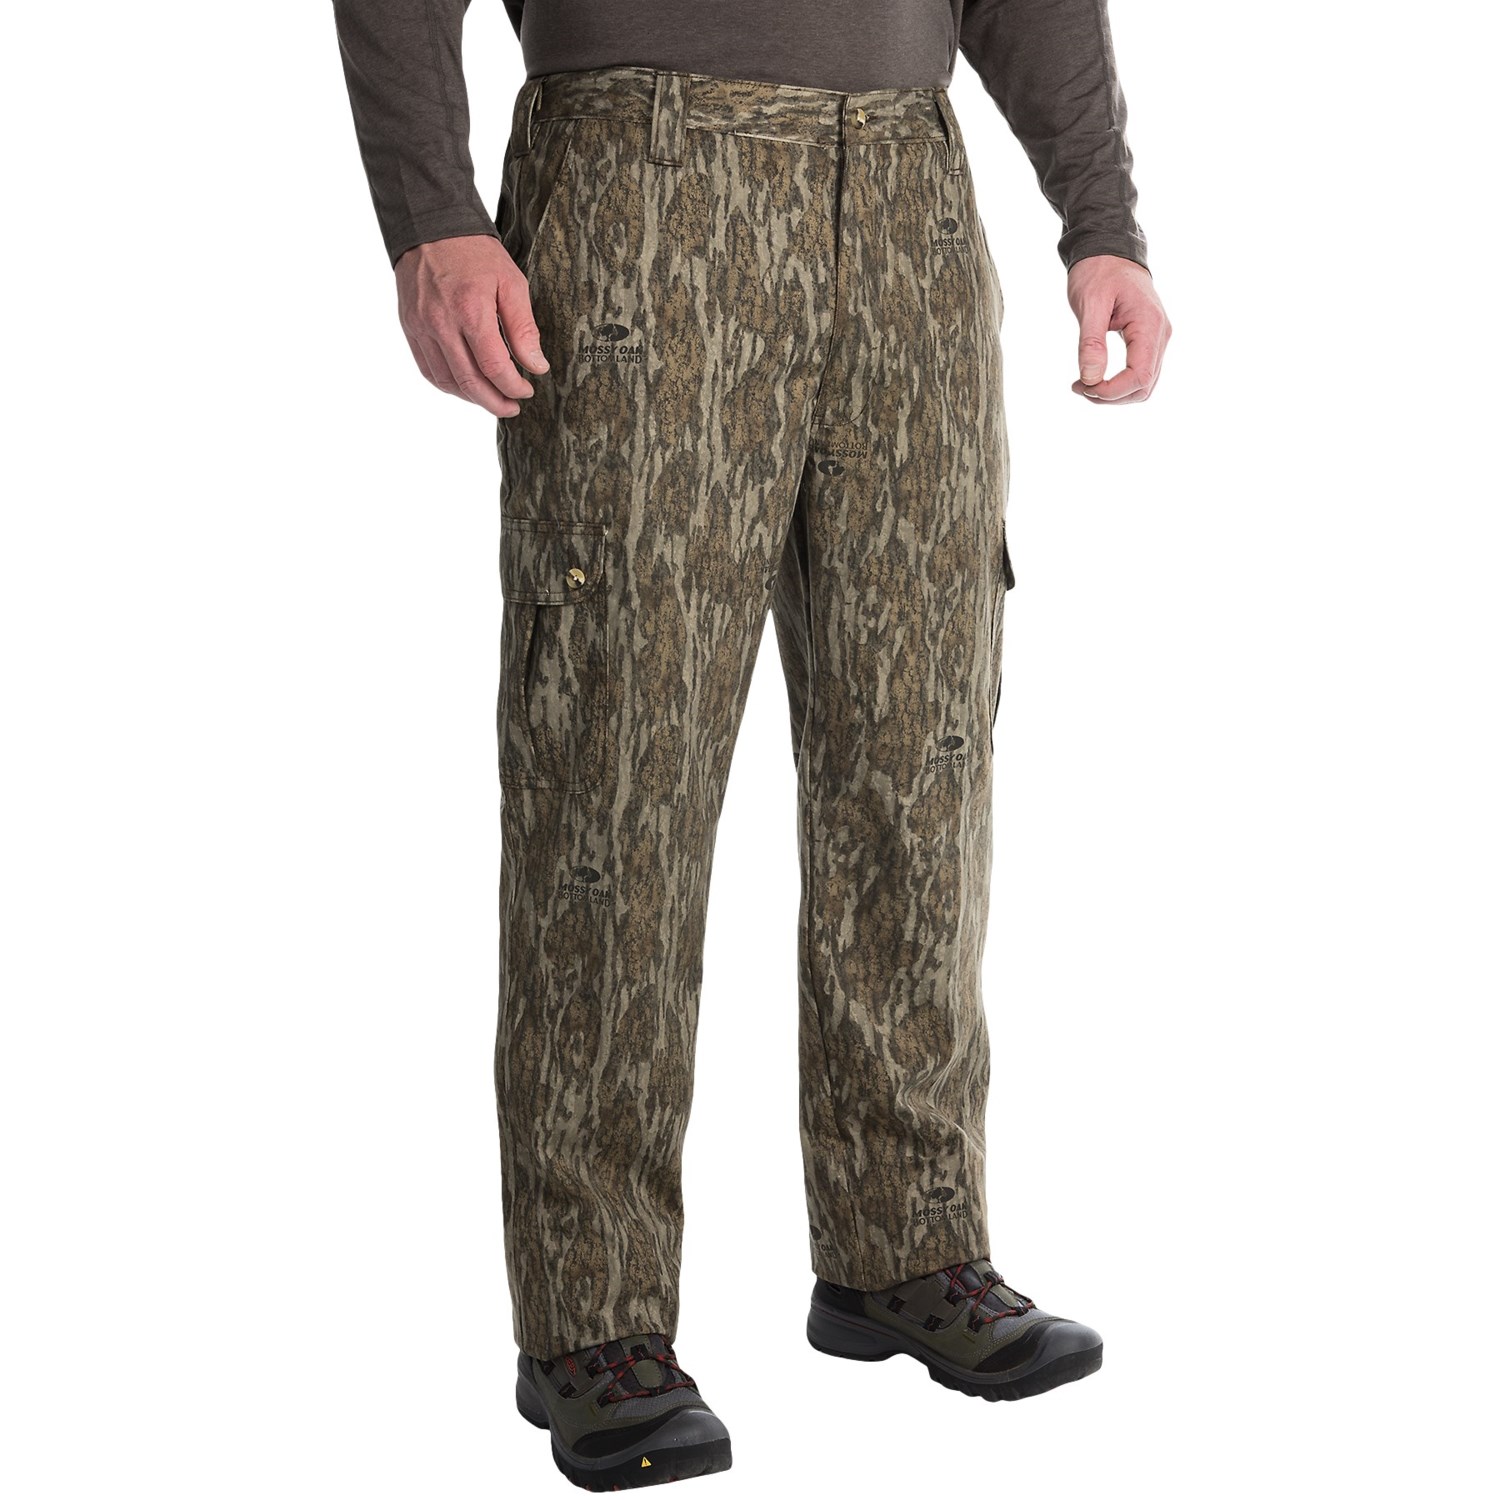 Mossy oak hunting pants sale